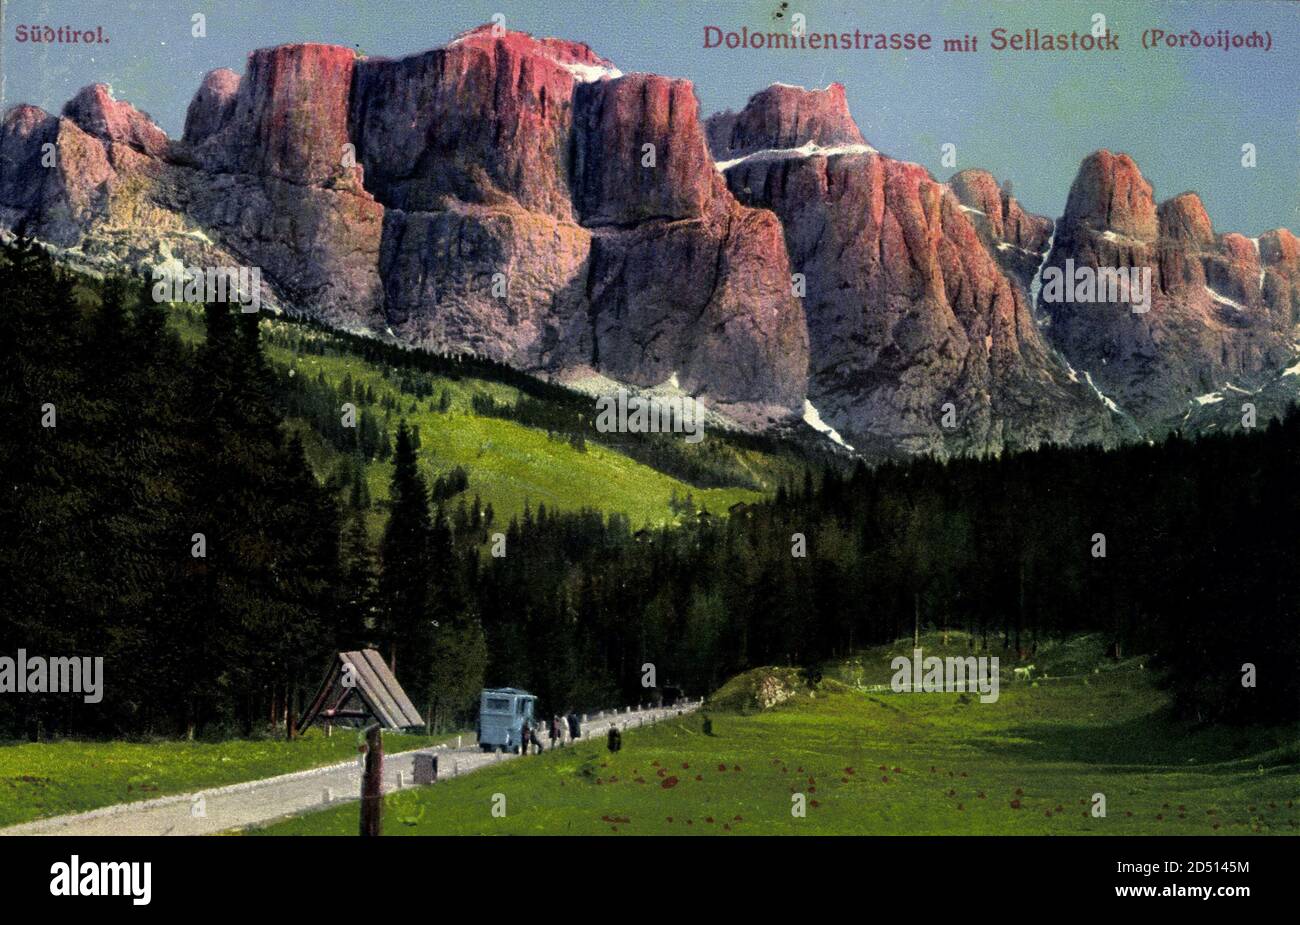 Tirol, Dolomitenstraße, Sellastock, Pordoijoch | utilizzo in tutto il mondo Foto Stock